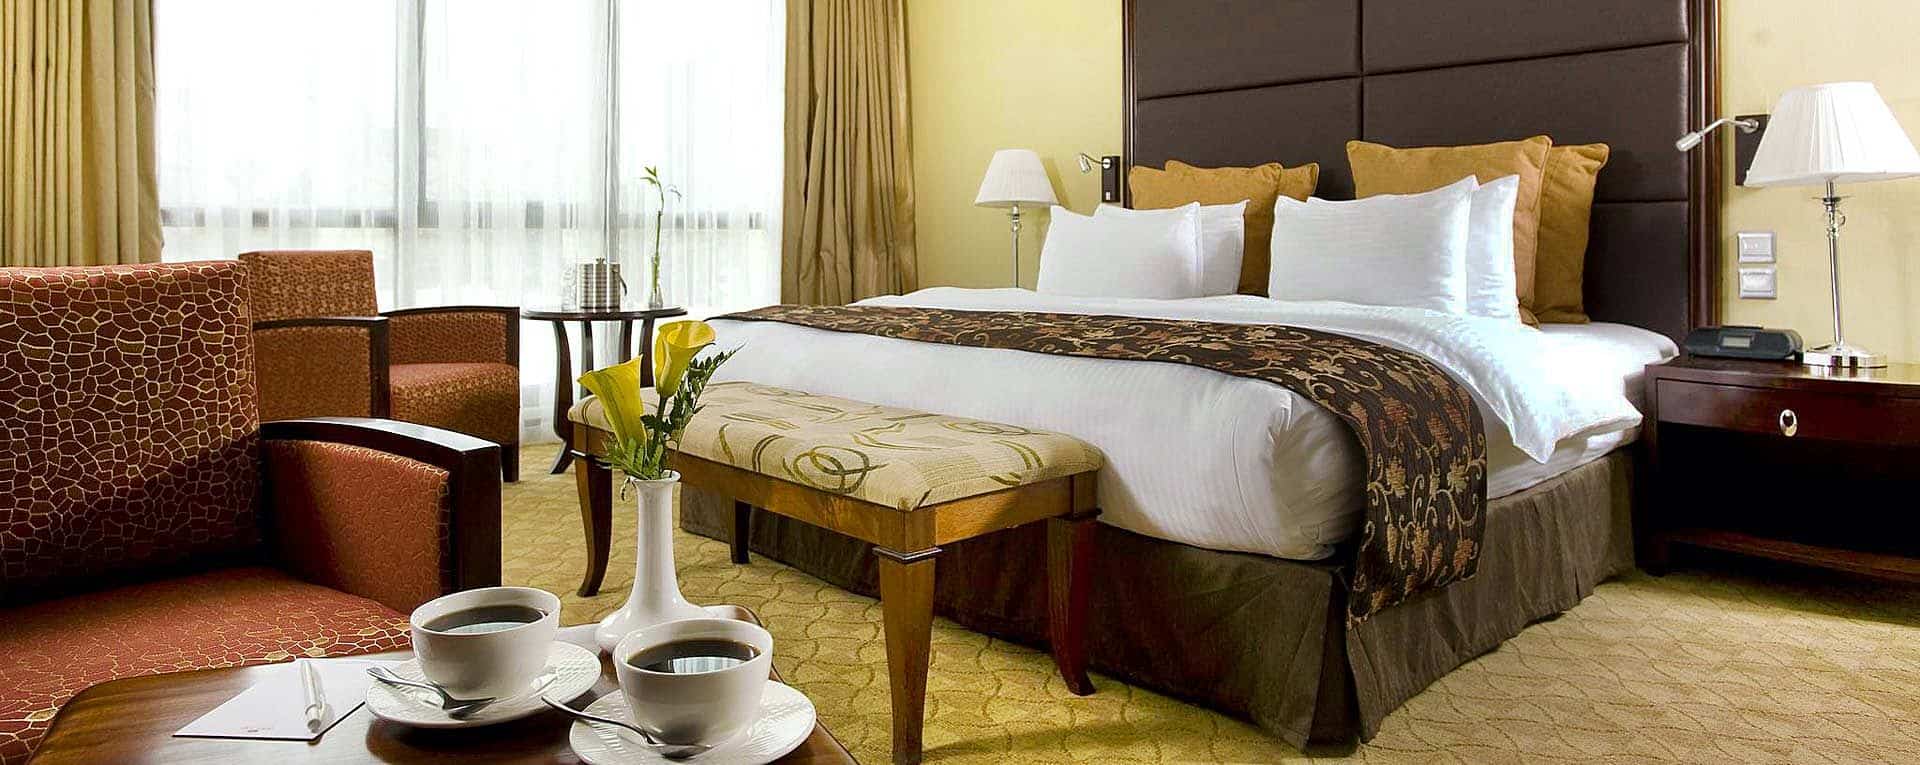 Crowne Plaza Hotel Nairobi - Kenya Accommodation - AfricanMecca Safaris &  Tours